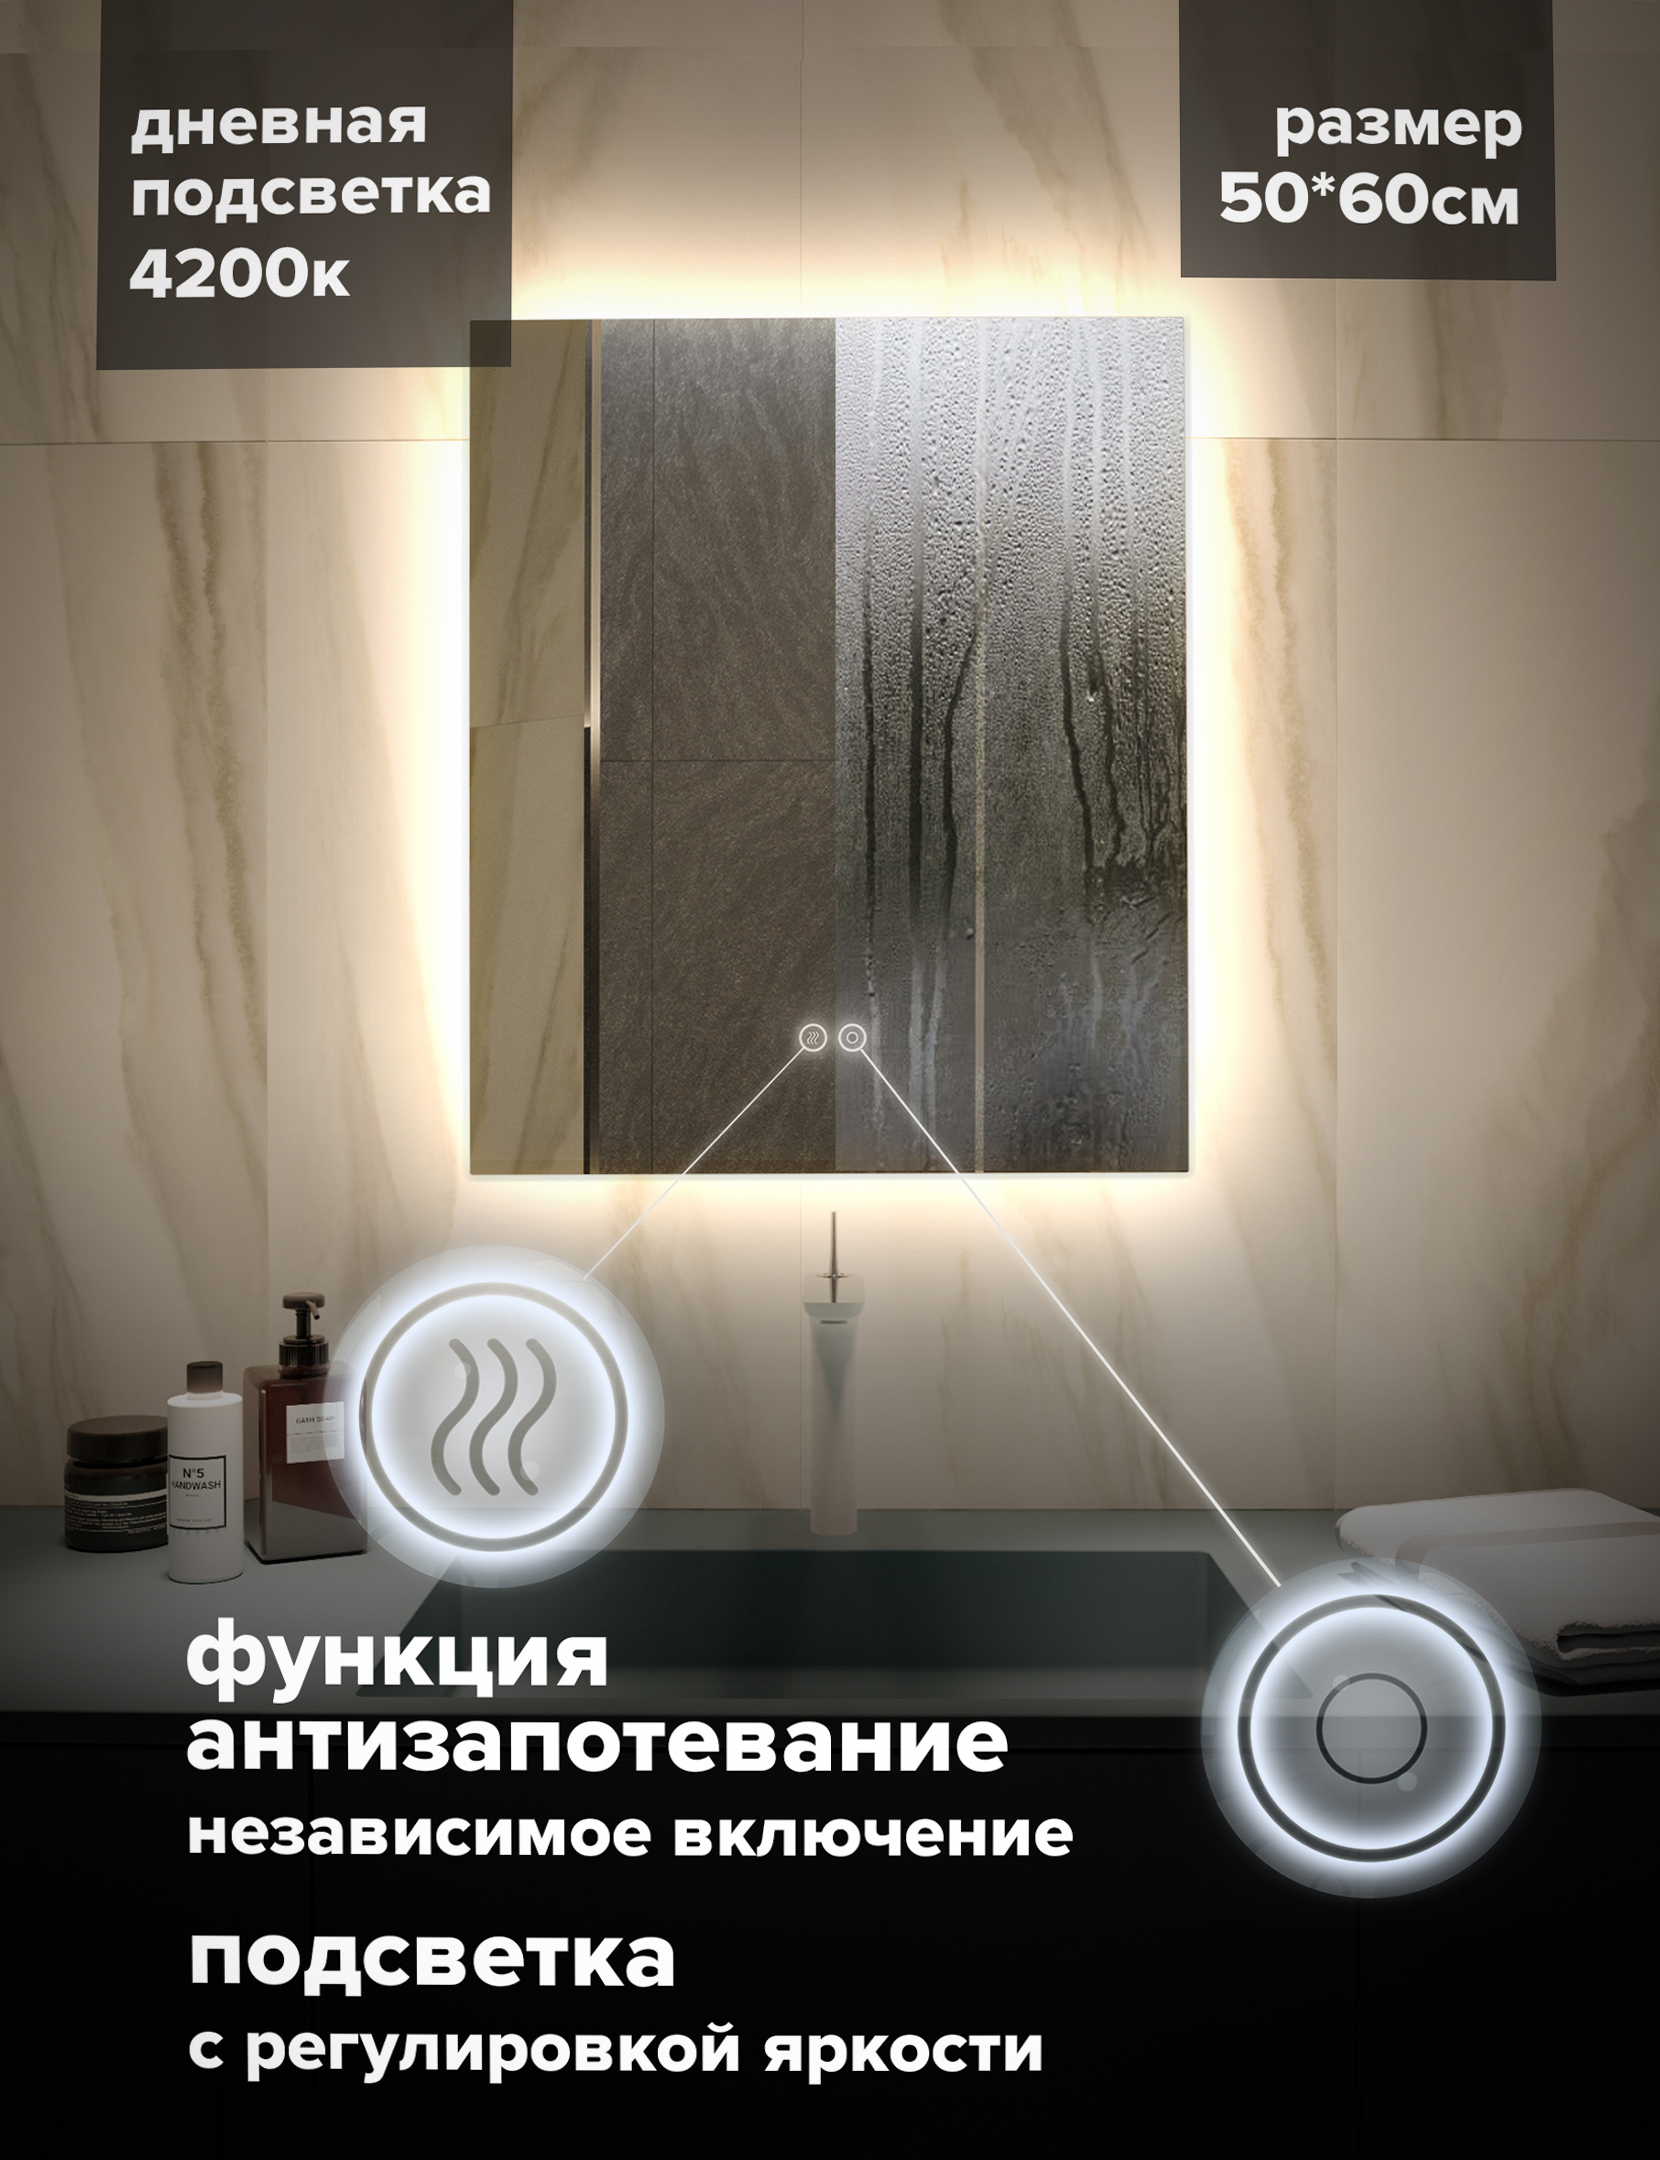 Зеркало для ванной Alfa Mirrors с дневной подсветкой 4200К прямоуг. 50х60см, арт. Ek-56Ad